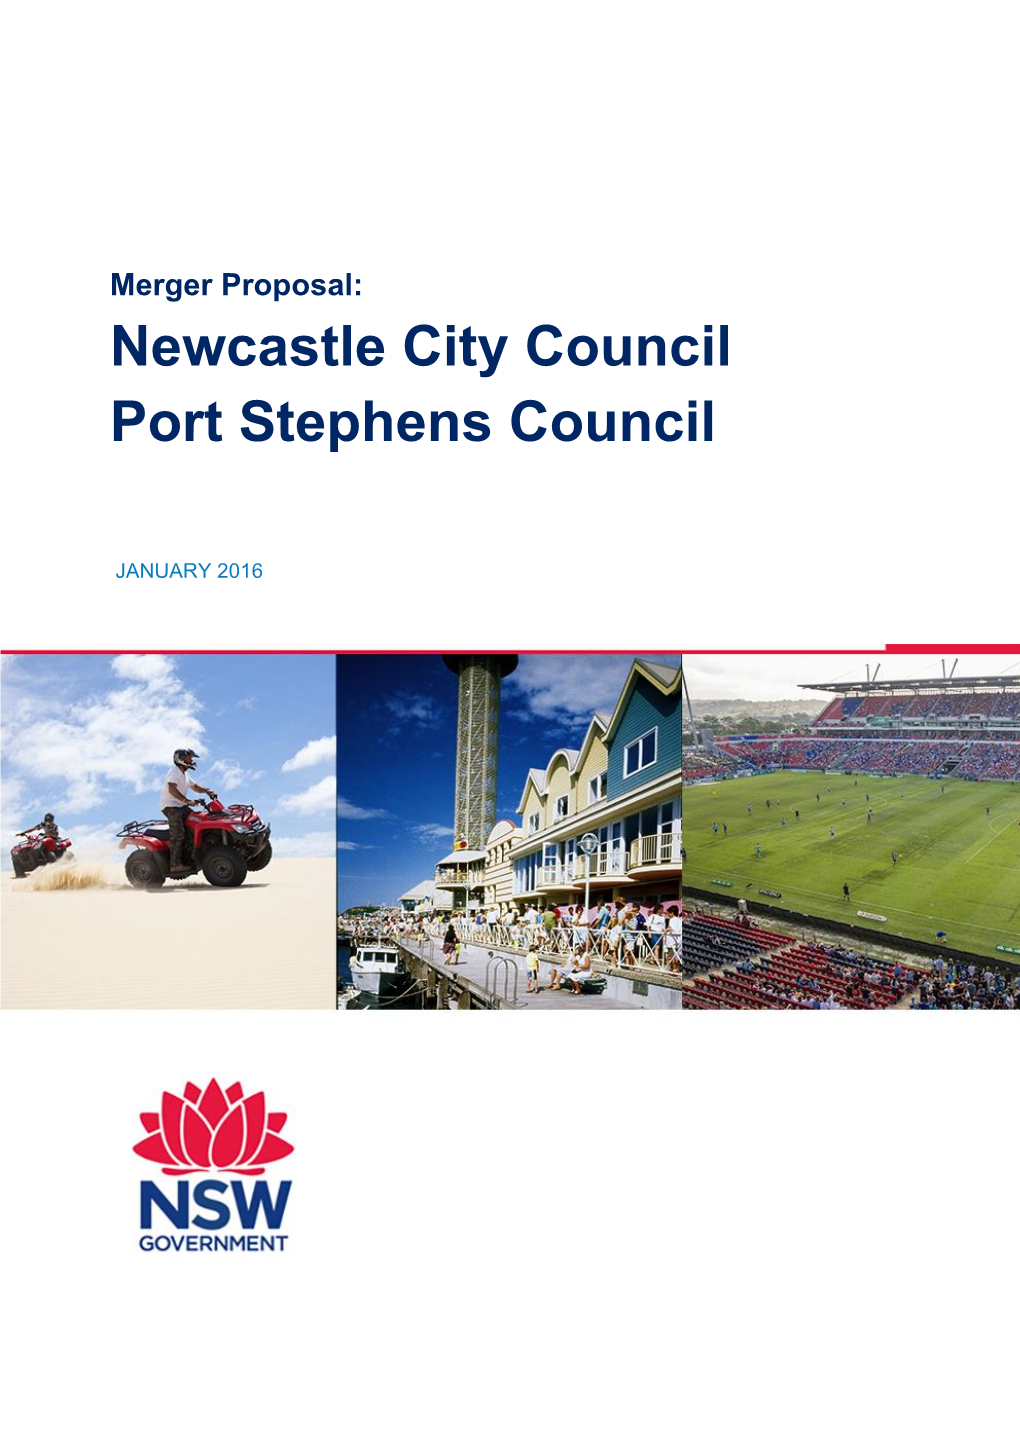 Merger Proposal: Newcastle City Council Port Stephens Council